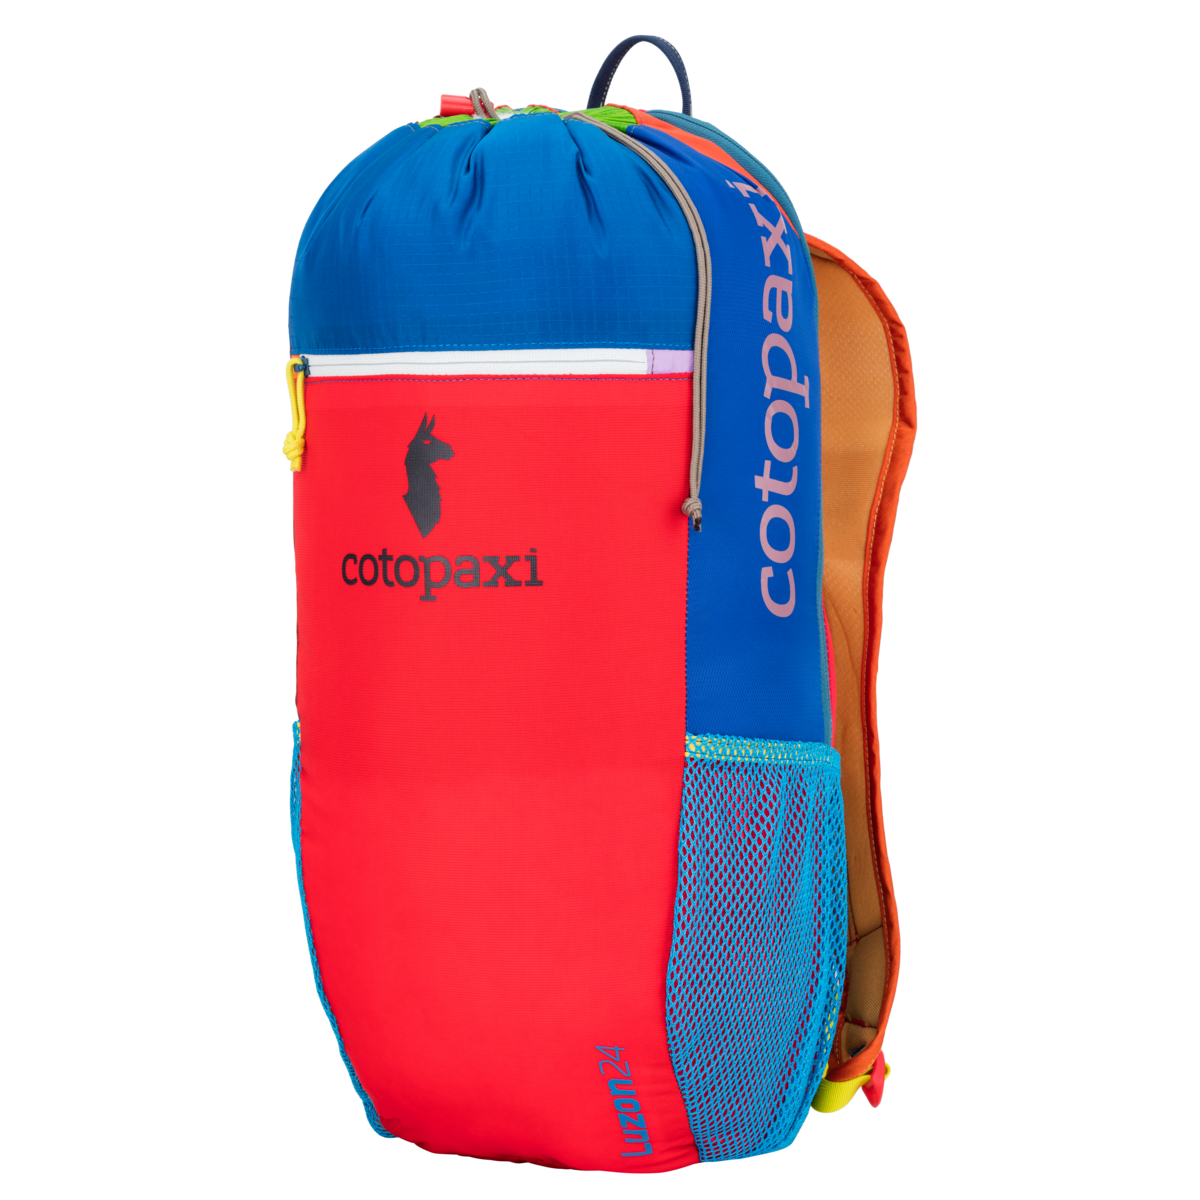 Cotopaxi Luzon 24L Backpack - Walking backpack